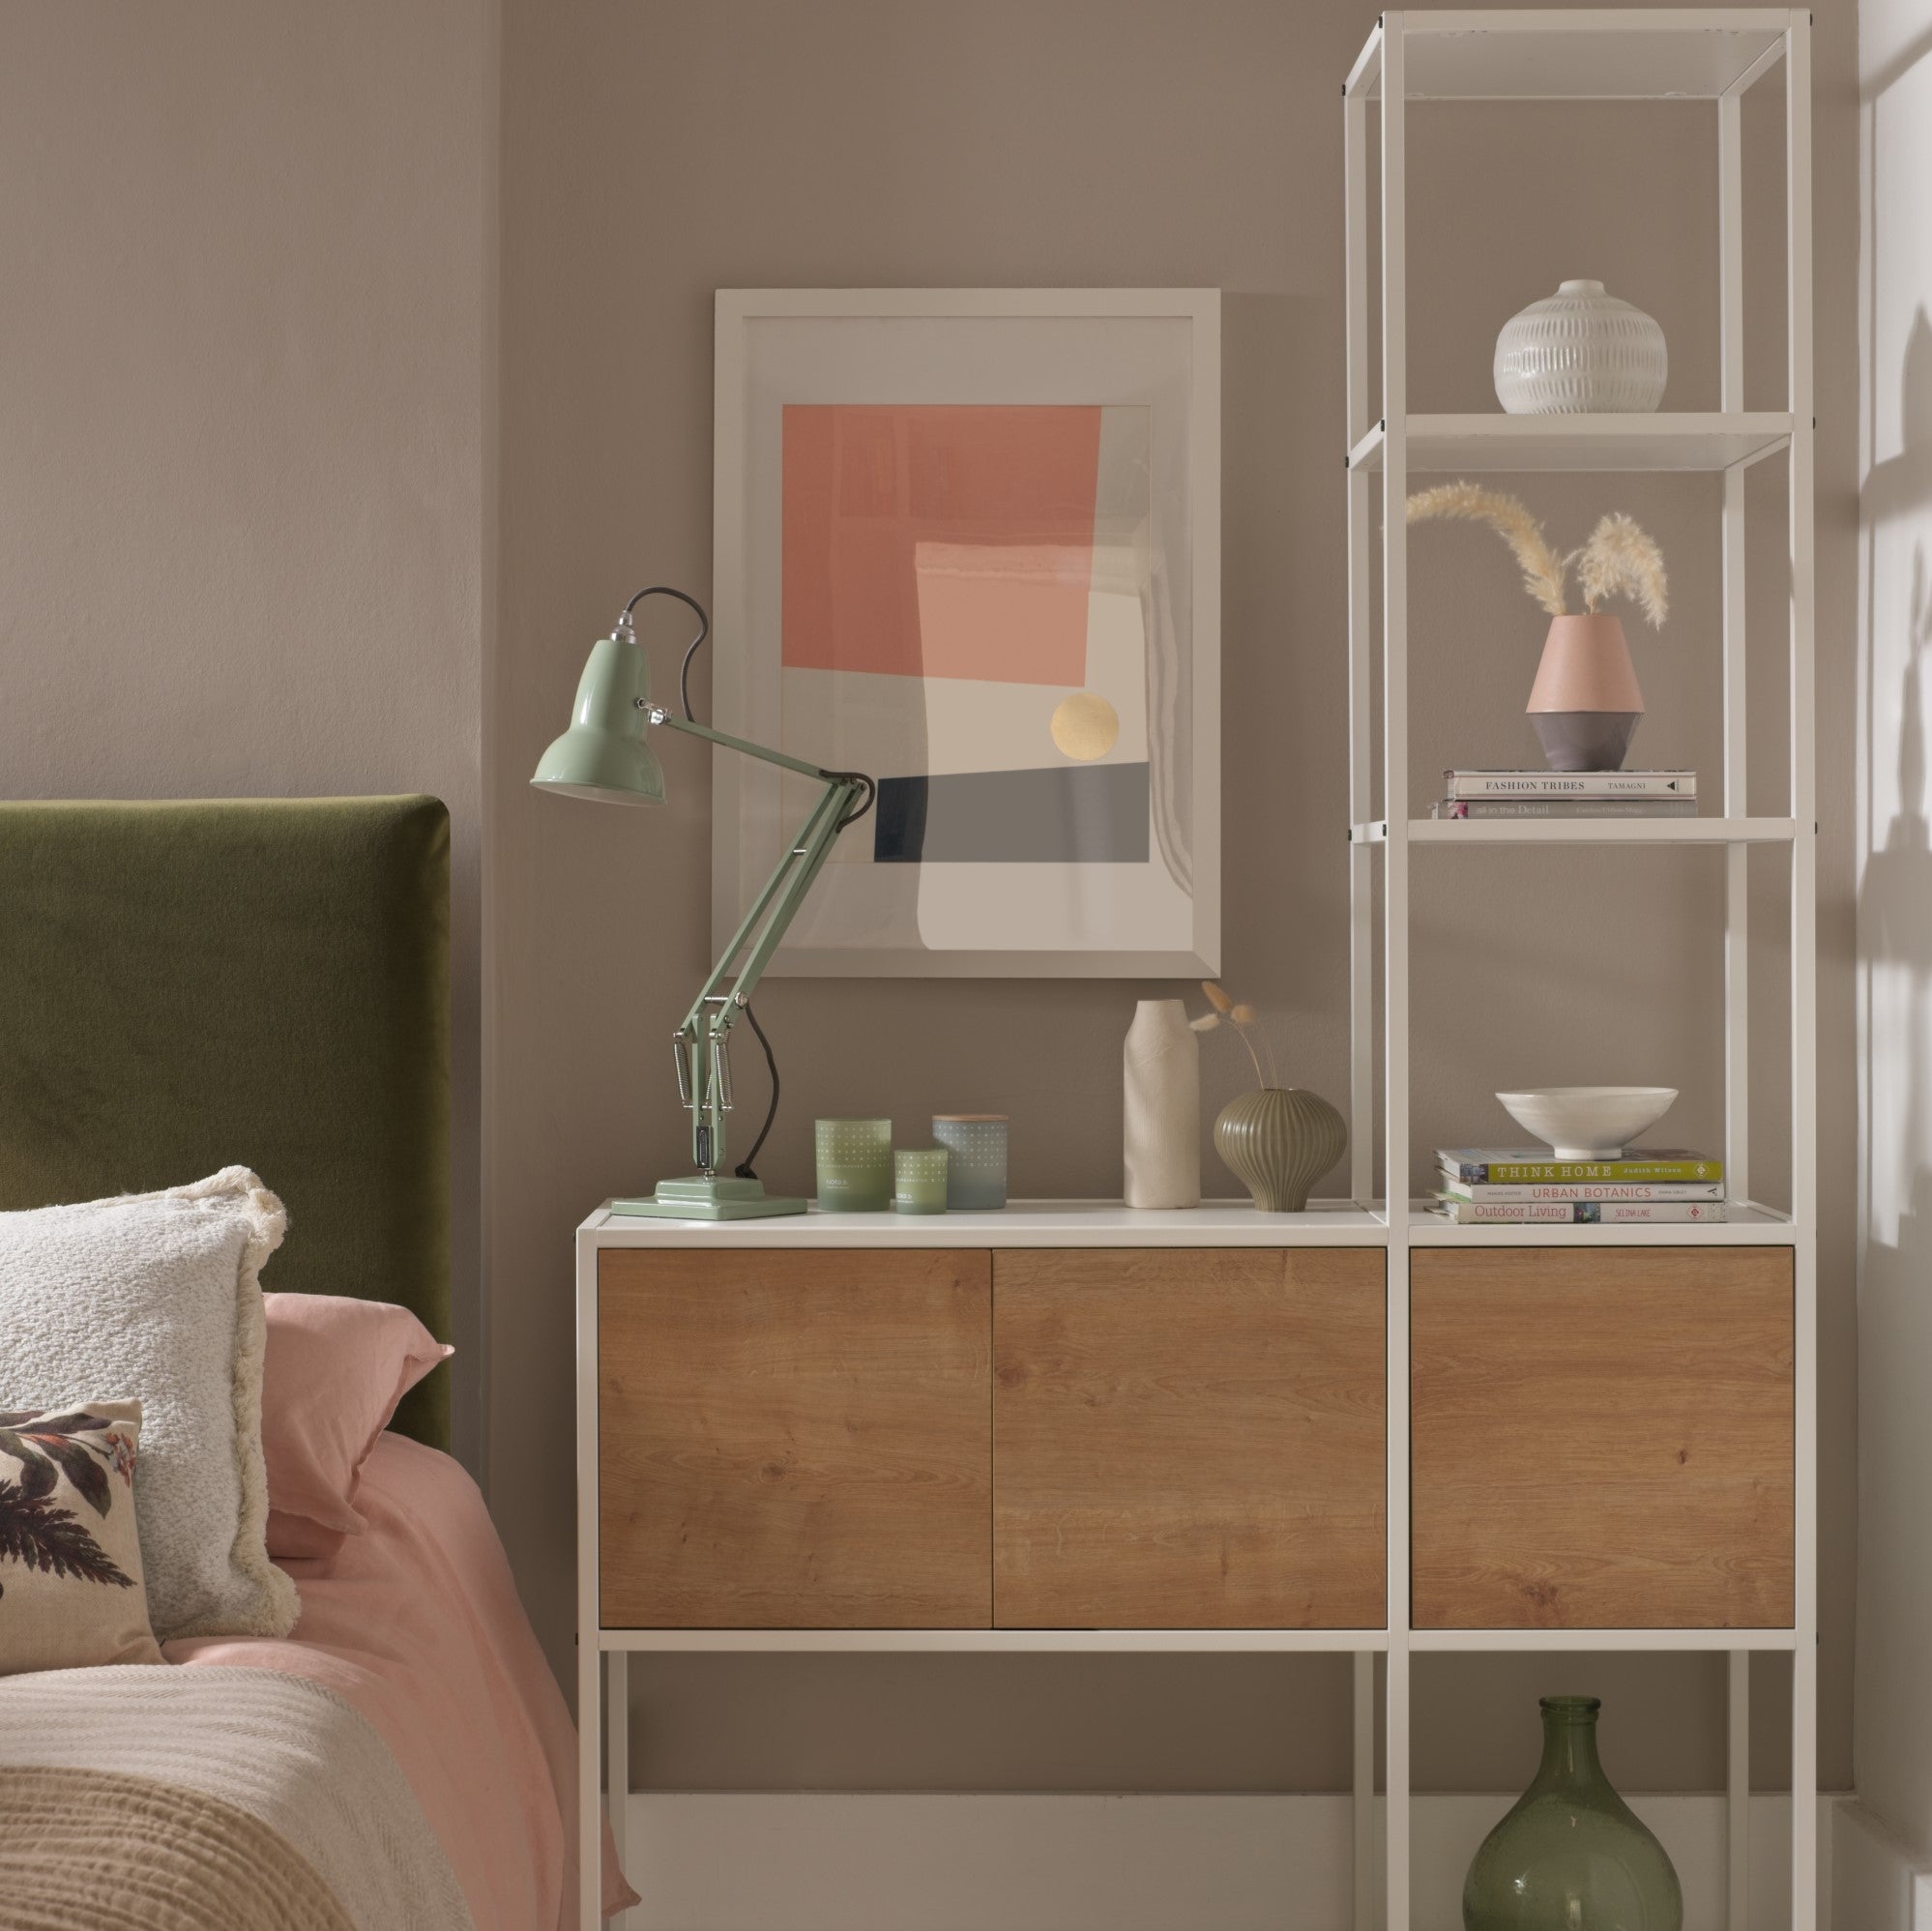 Your Bedroom Storage: Making Furniture Adapt